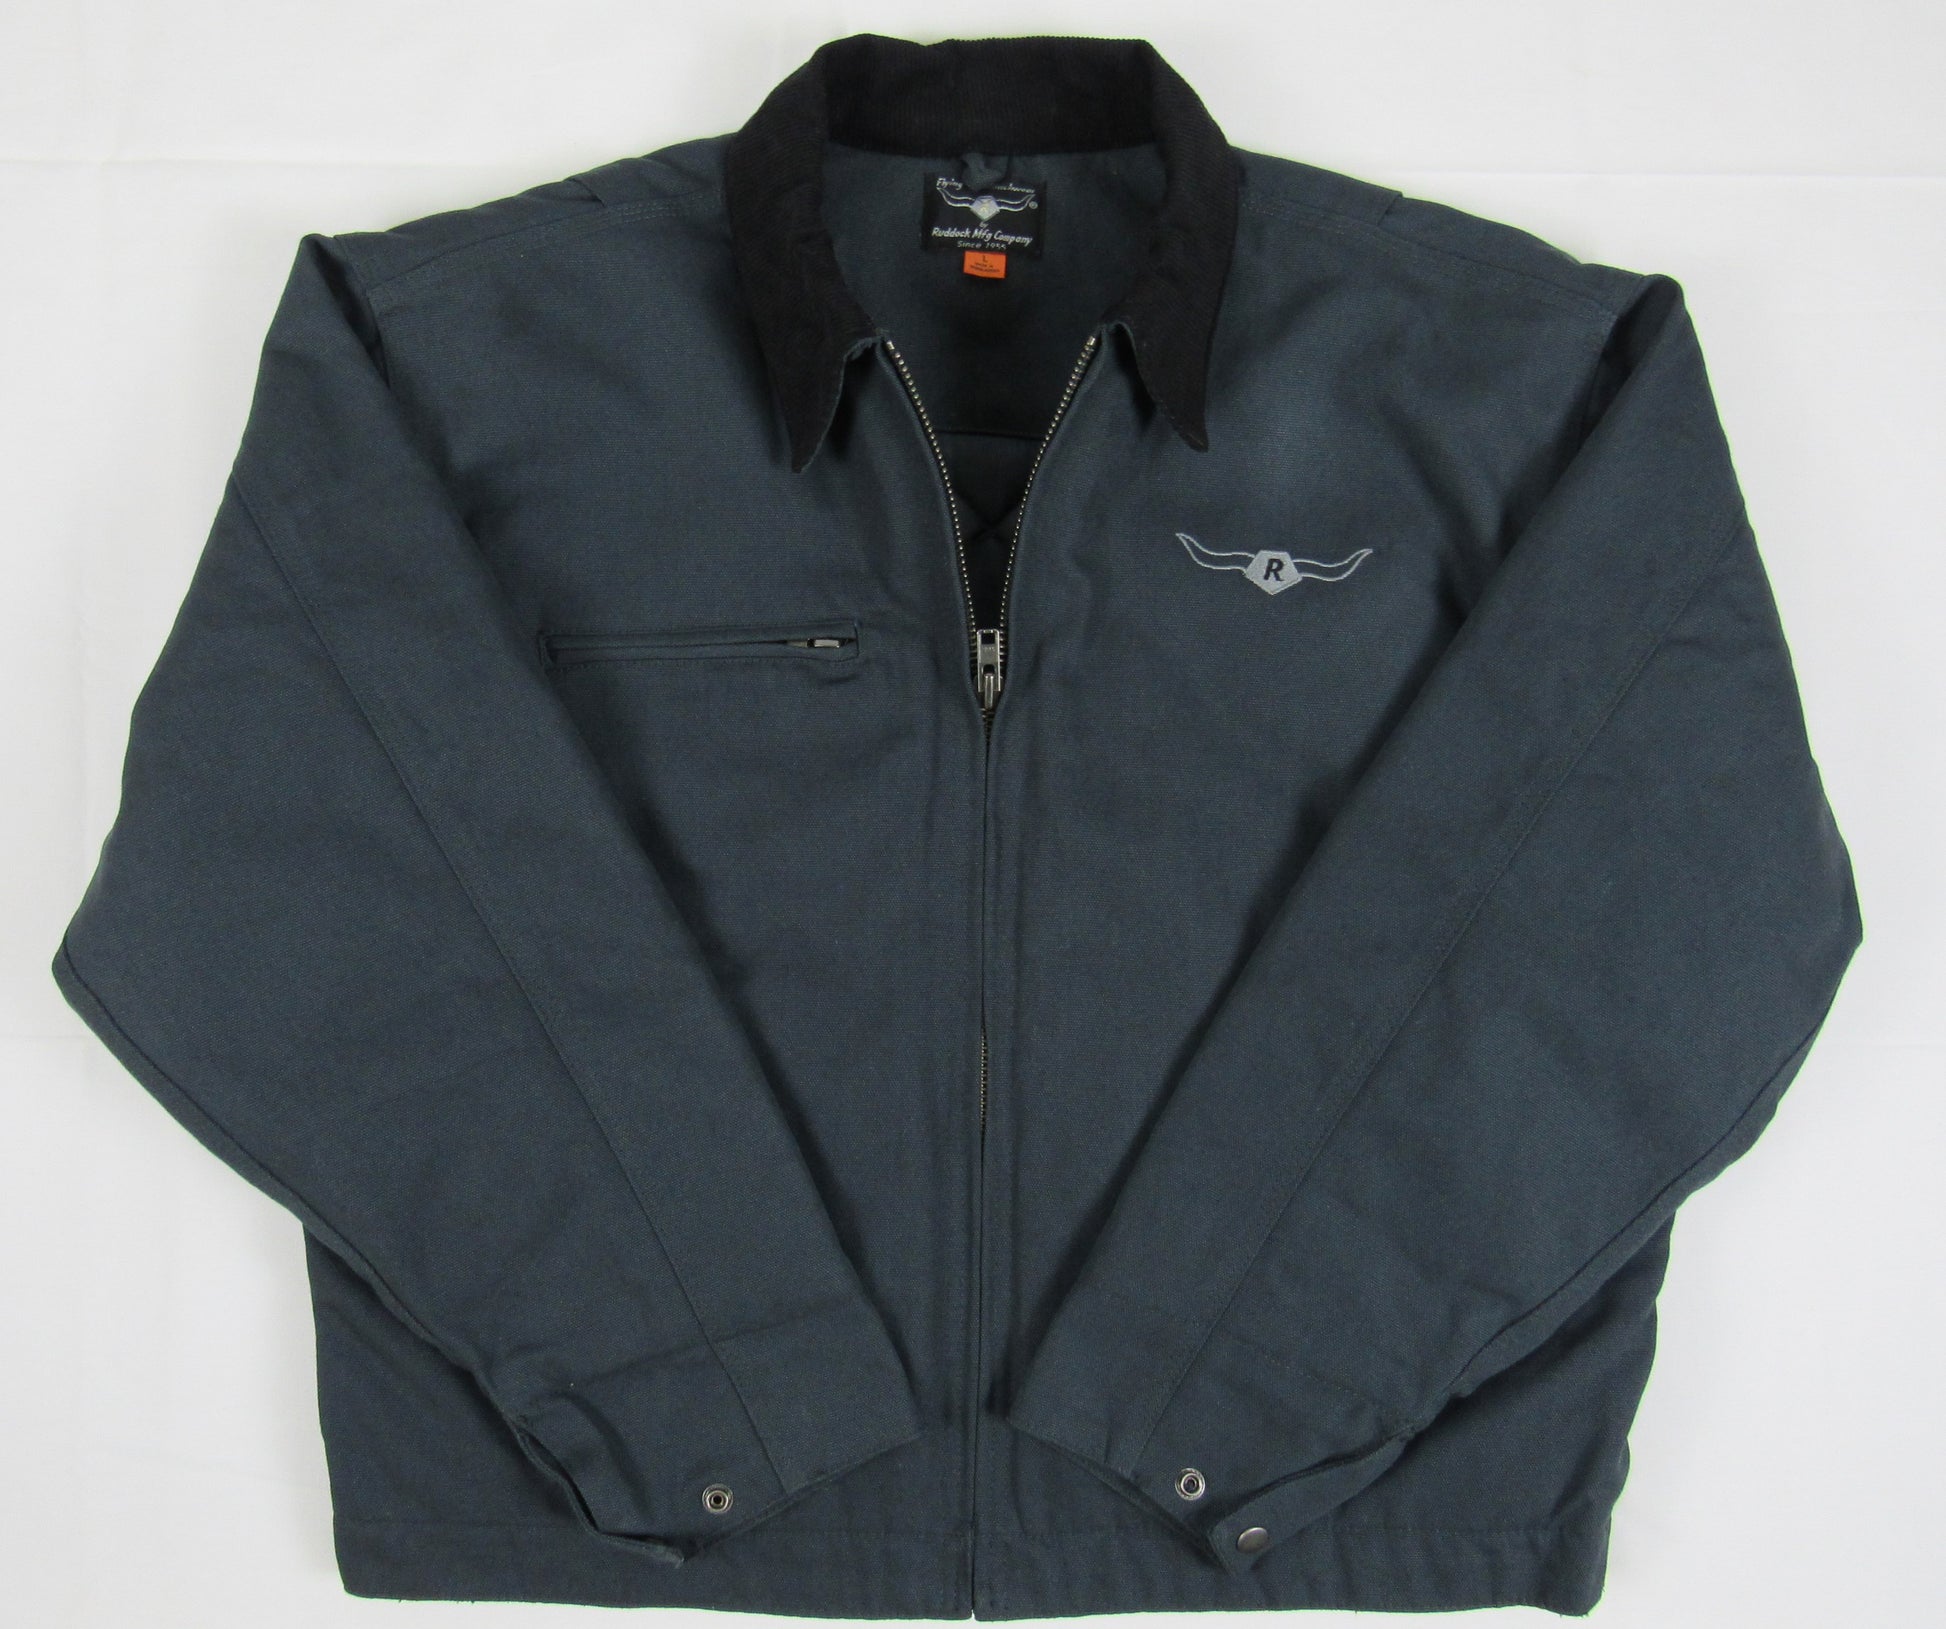 Slate gray duck cloth work jacket with metal zipper